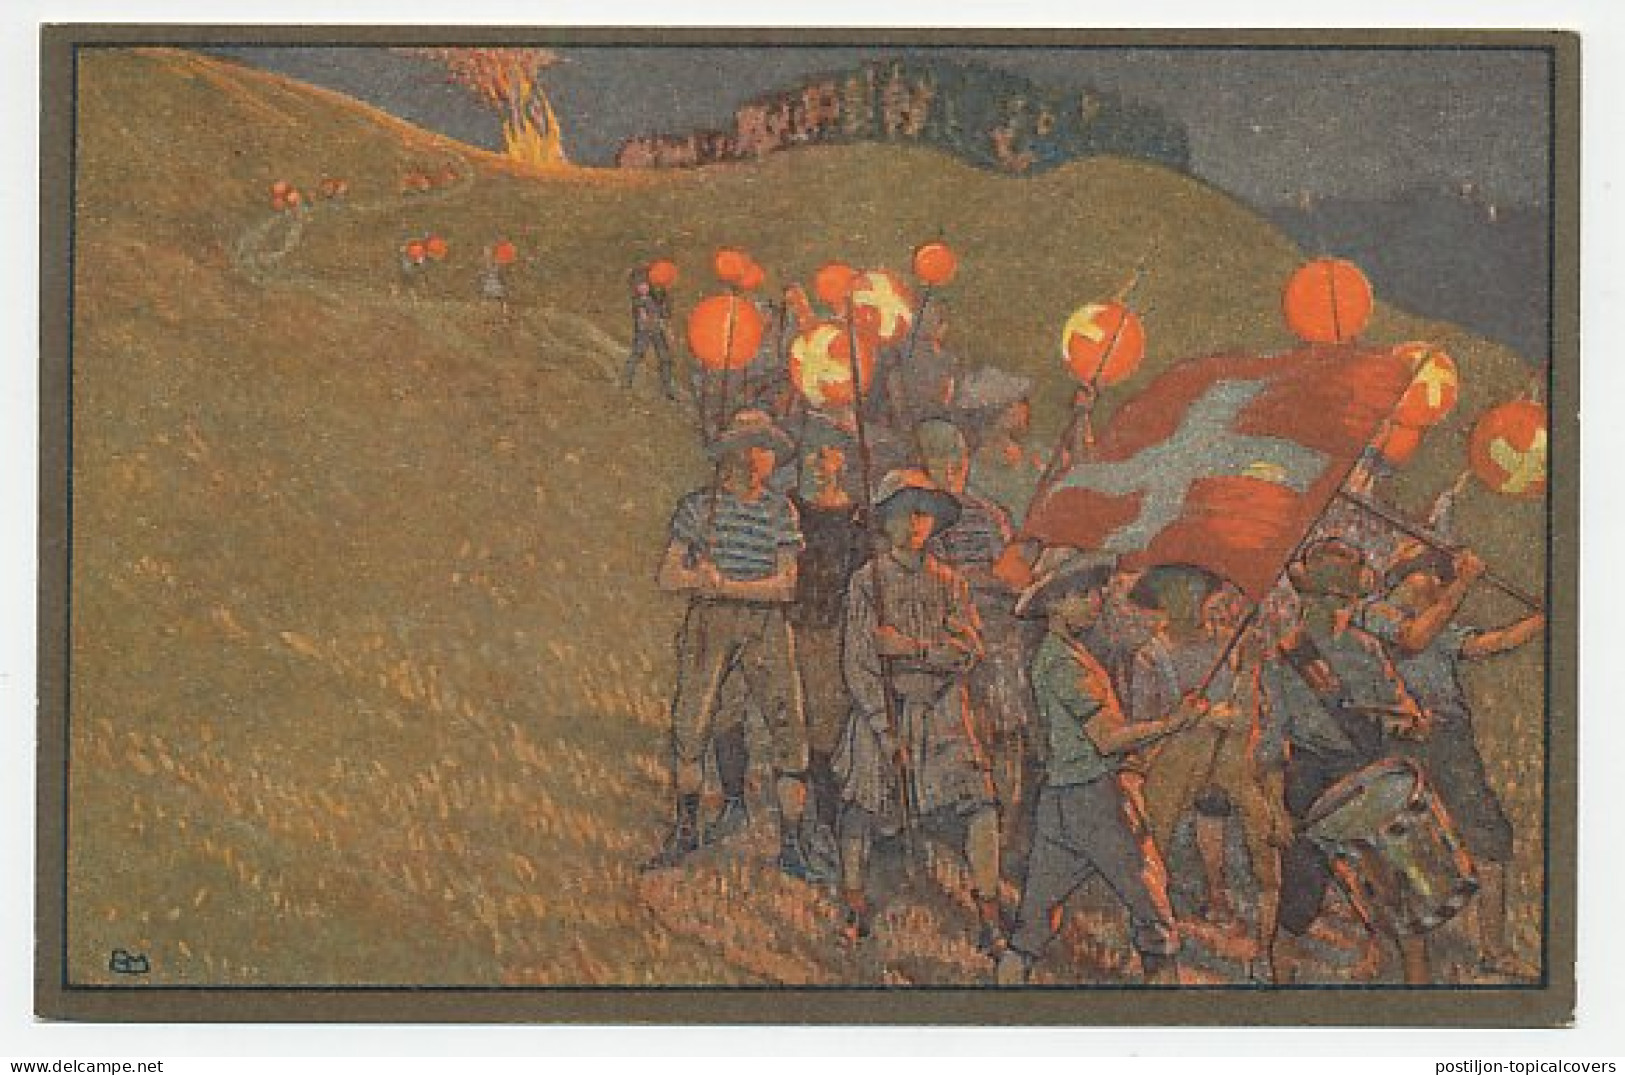 Postal Stationery Switzerland 1912 Red Cross - Drummer - Paper Lantern  - Musik